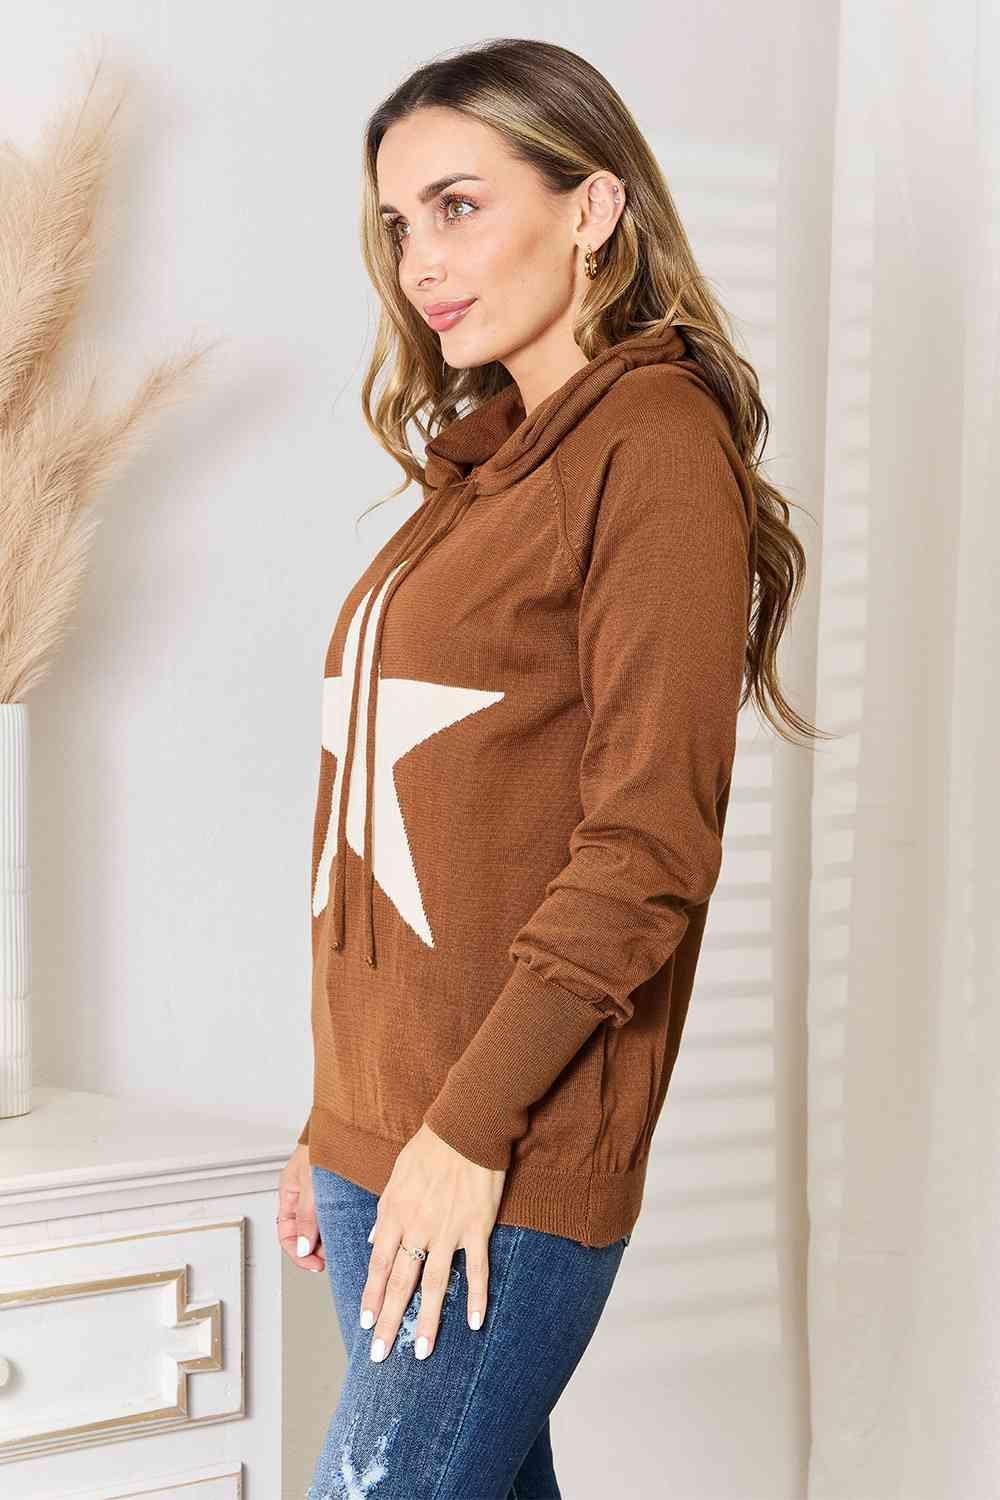 Bona Fide Fashion - Full Size Star Graphic Hooded Sweater - Women Fashion - Bona Fide Fashion